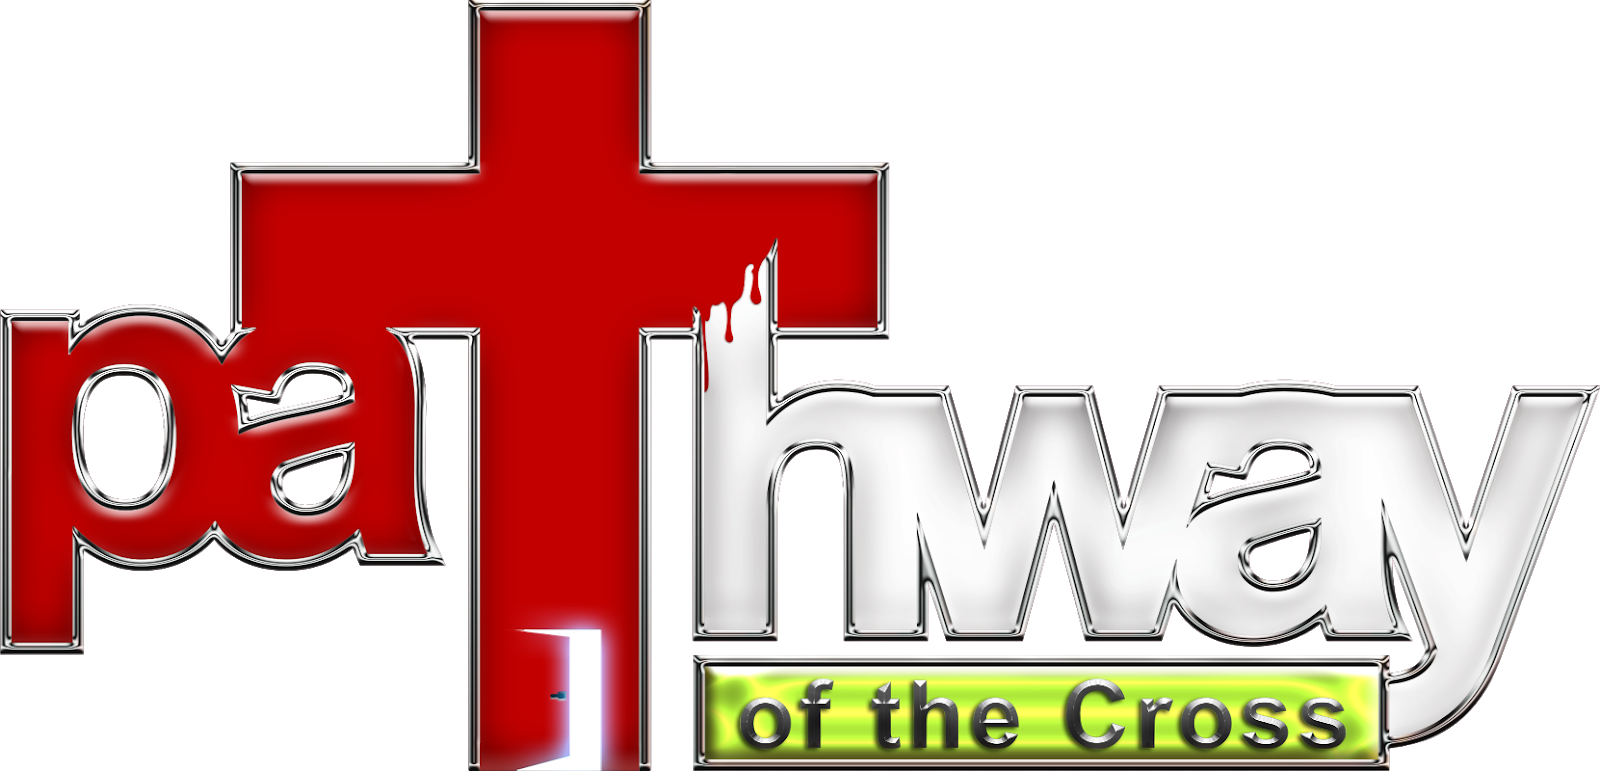 Pathway of the Cross